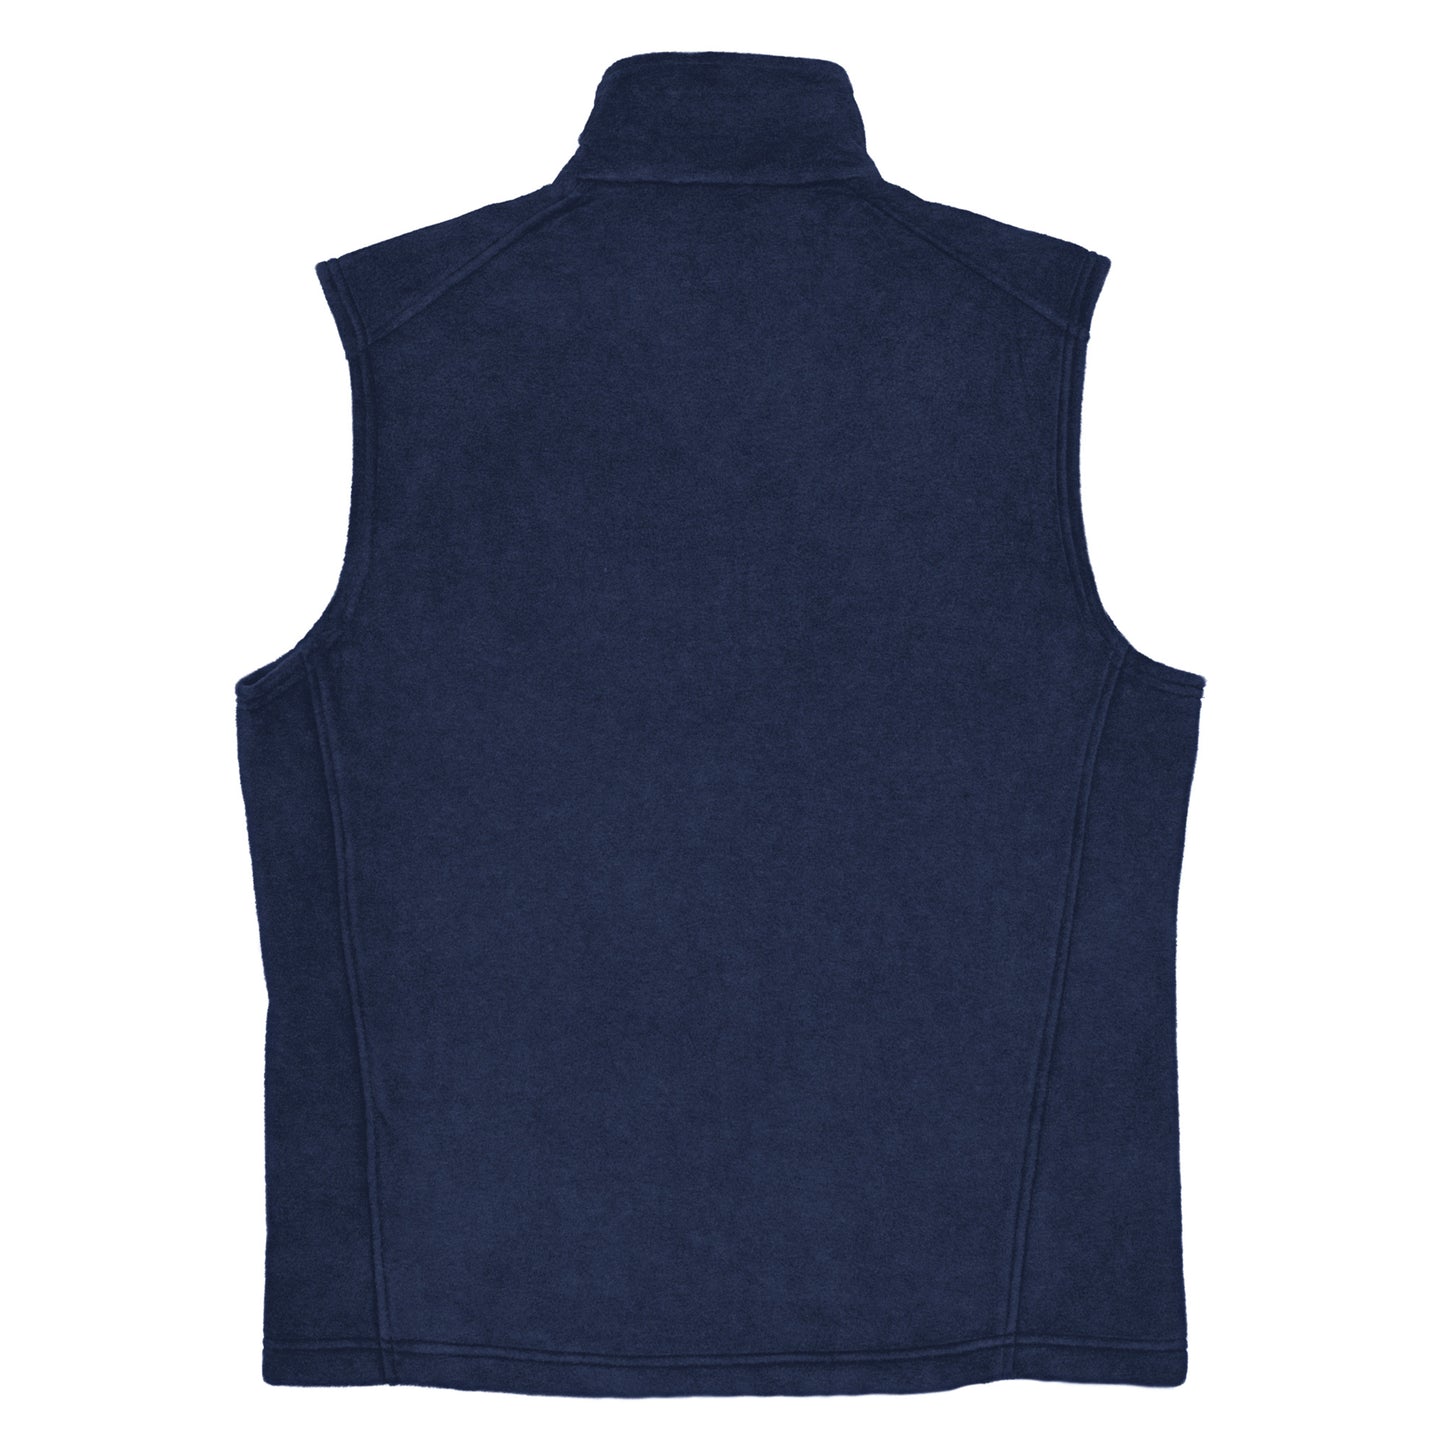 Men’s Columbia Fleece Vest by Blue Chico